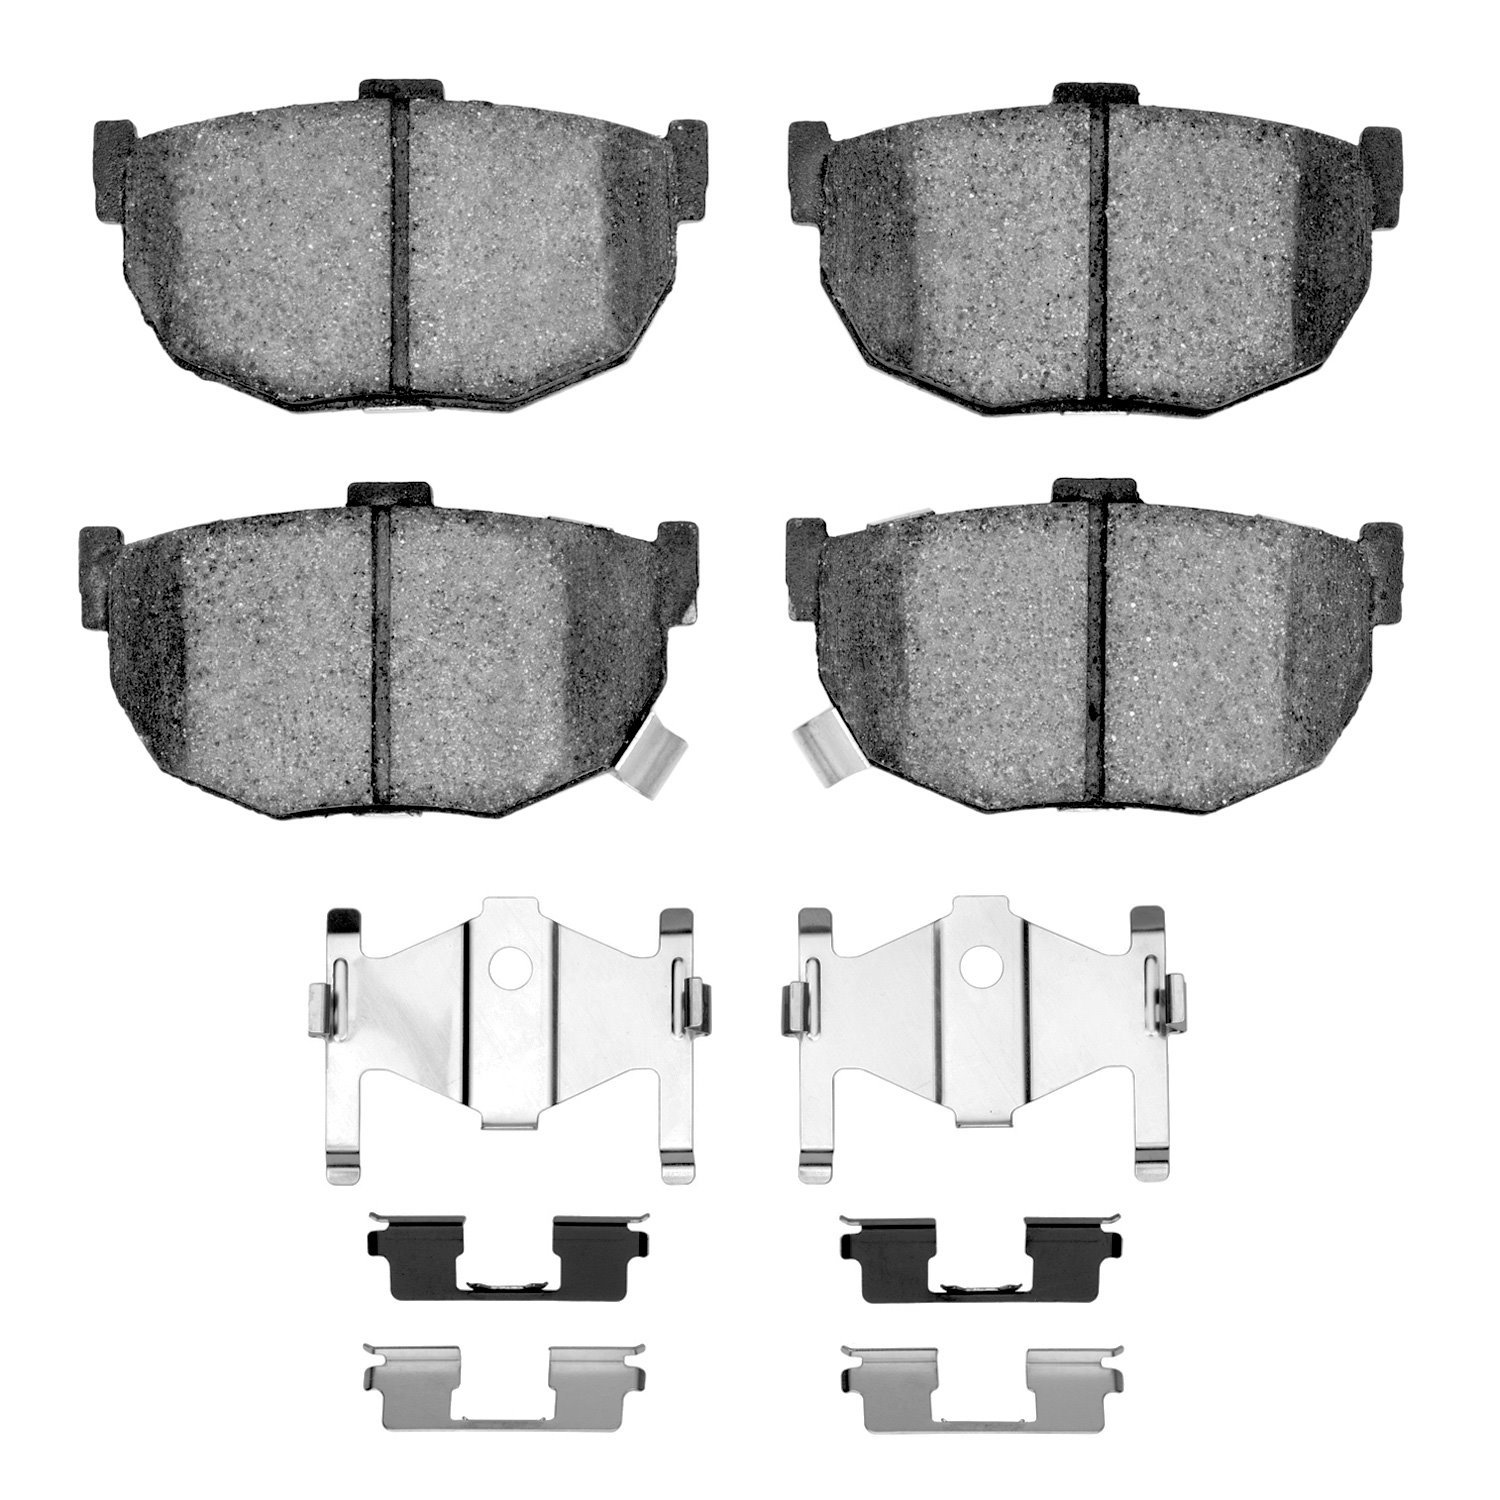 1310-0323-01 3000-Series Ceramic Brake Pads & Hardware Kit, 1985-2009 Multiple Makes/Models, Position: Rear